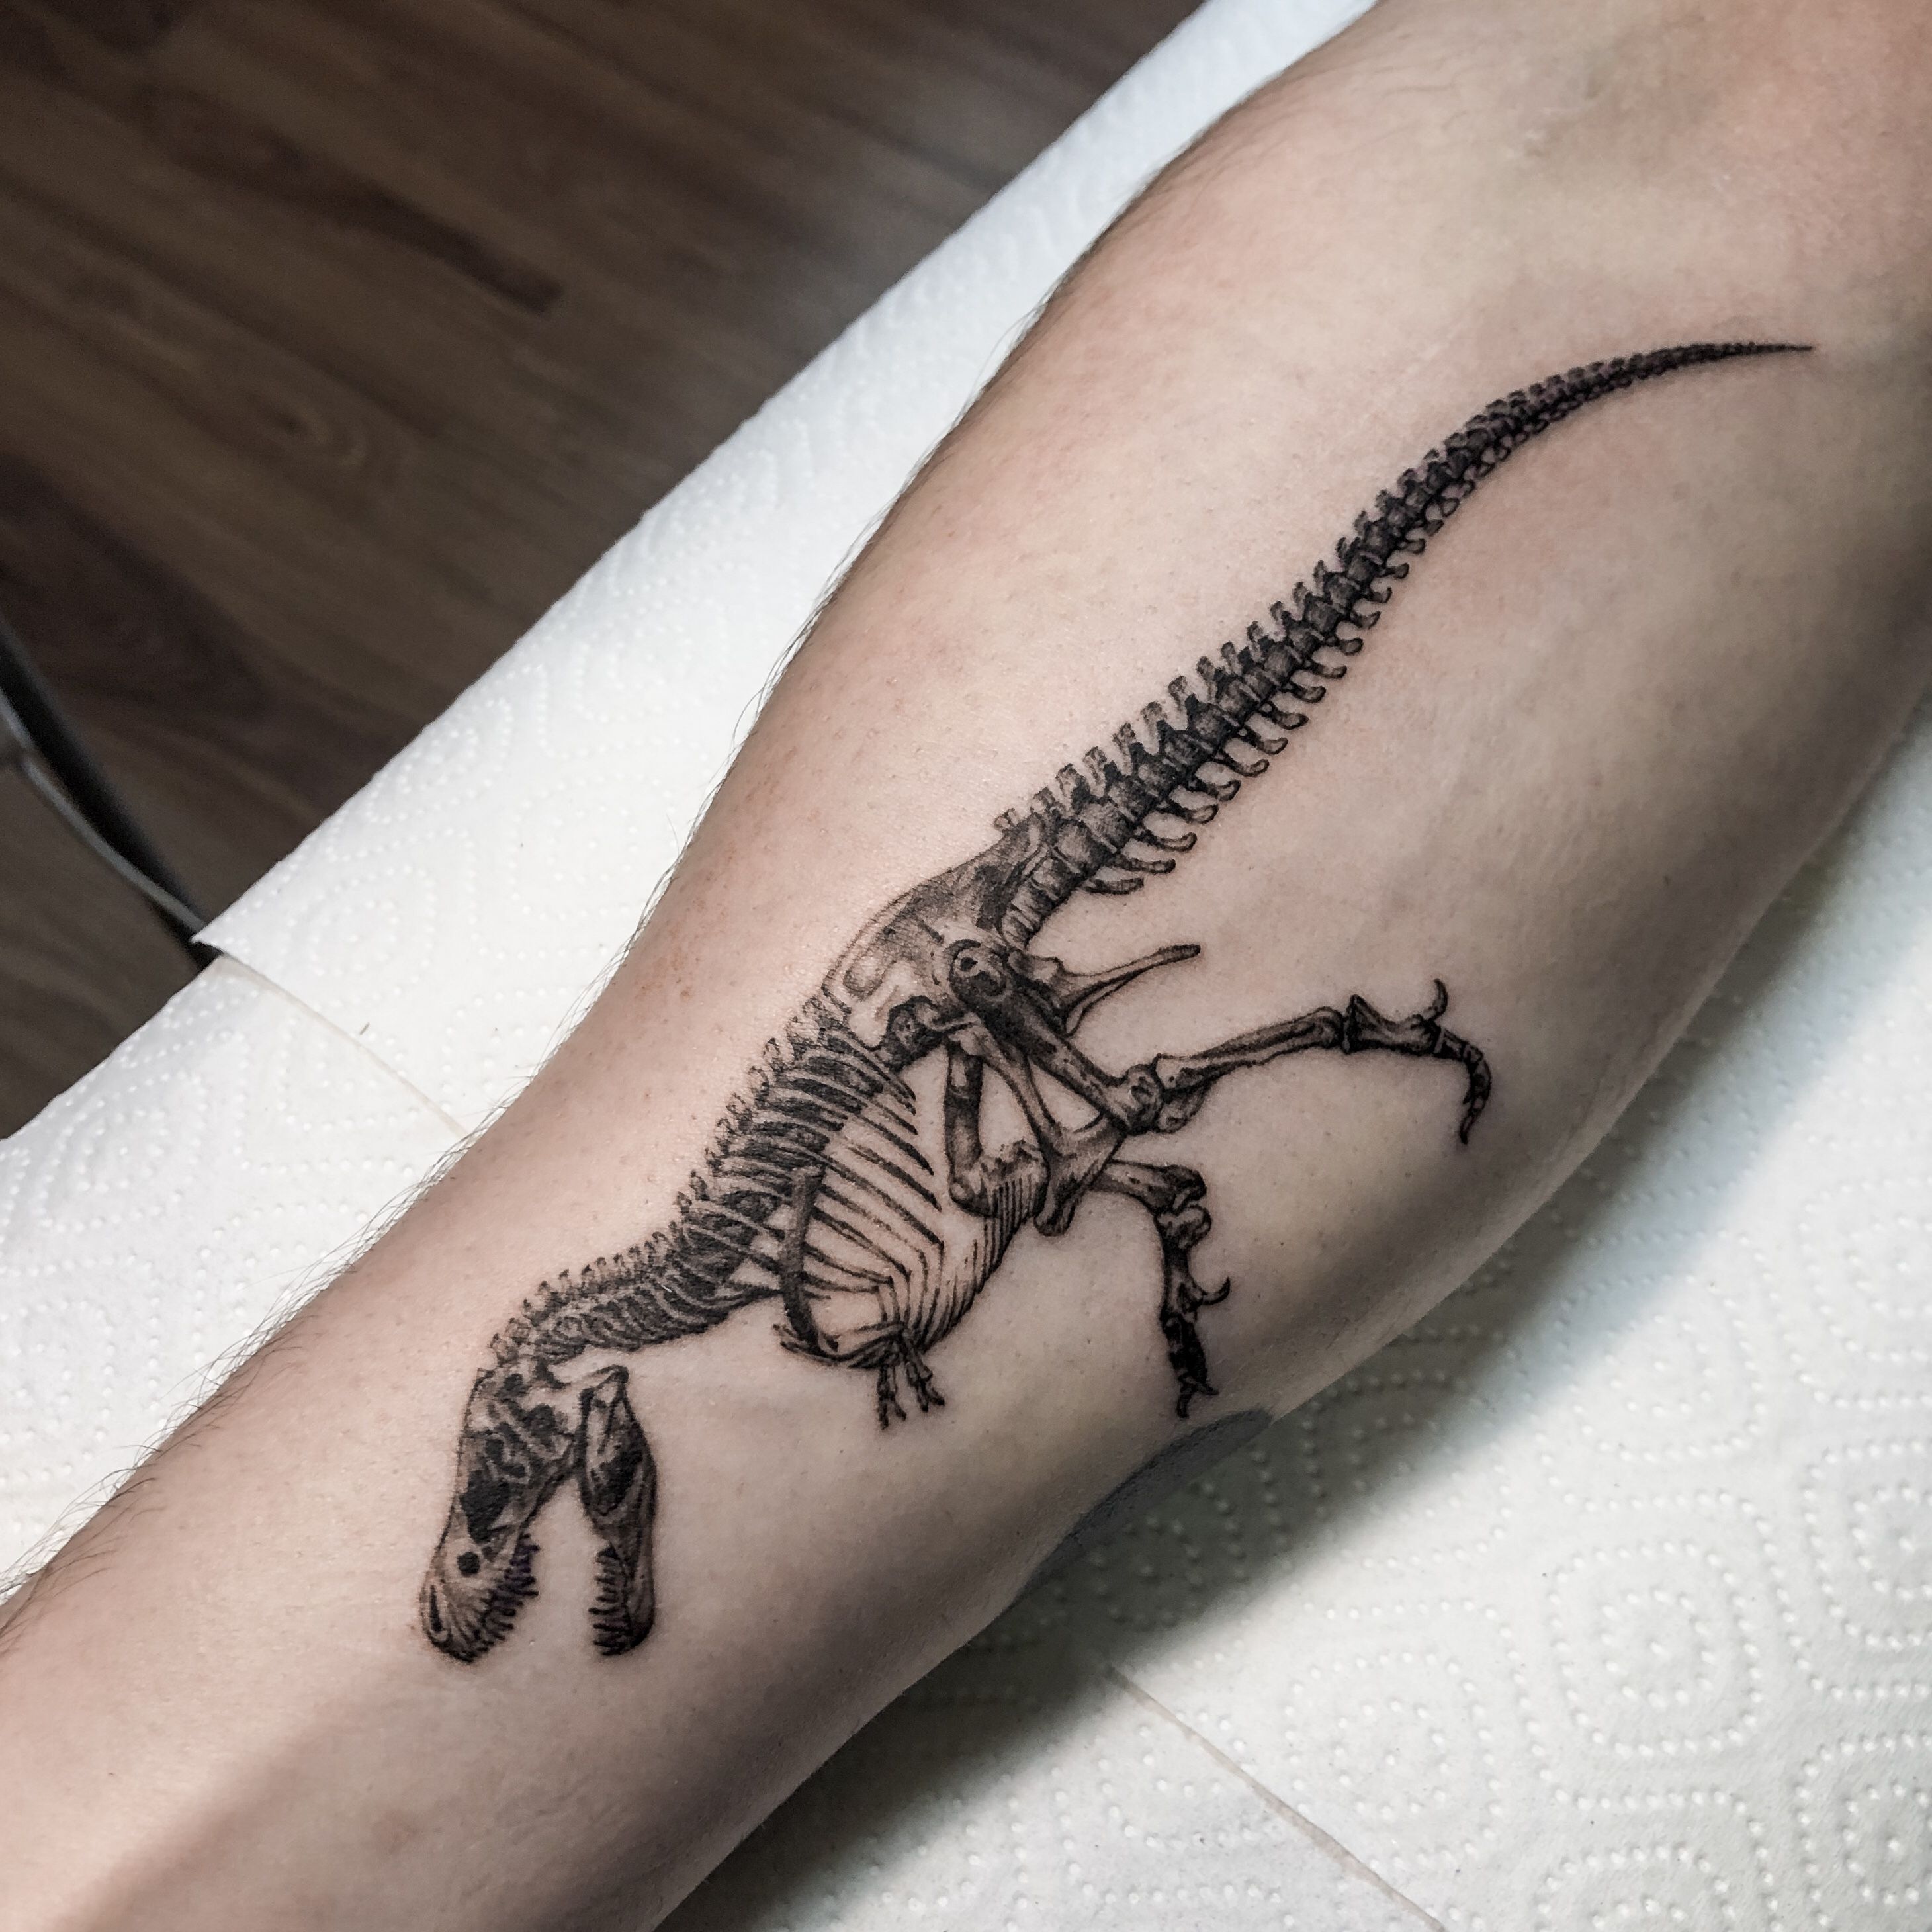 Dinosaur Skeleton Tattoo by tstctc on DeviantArt